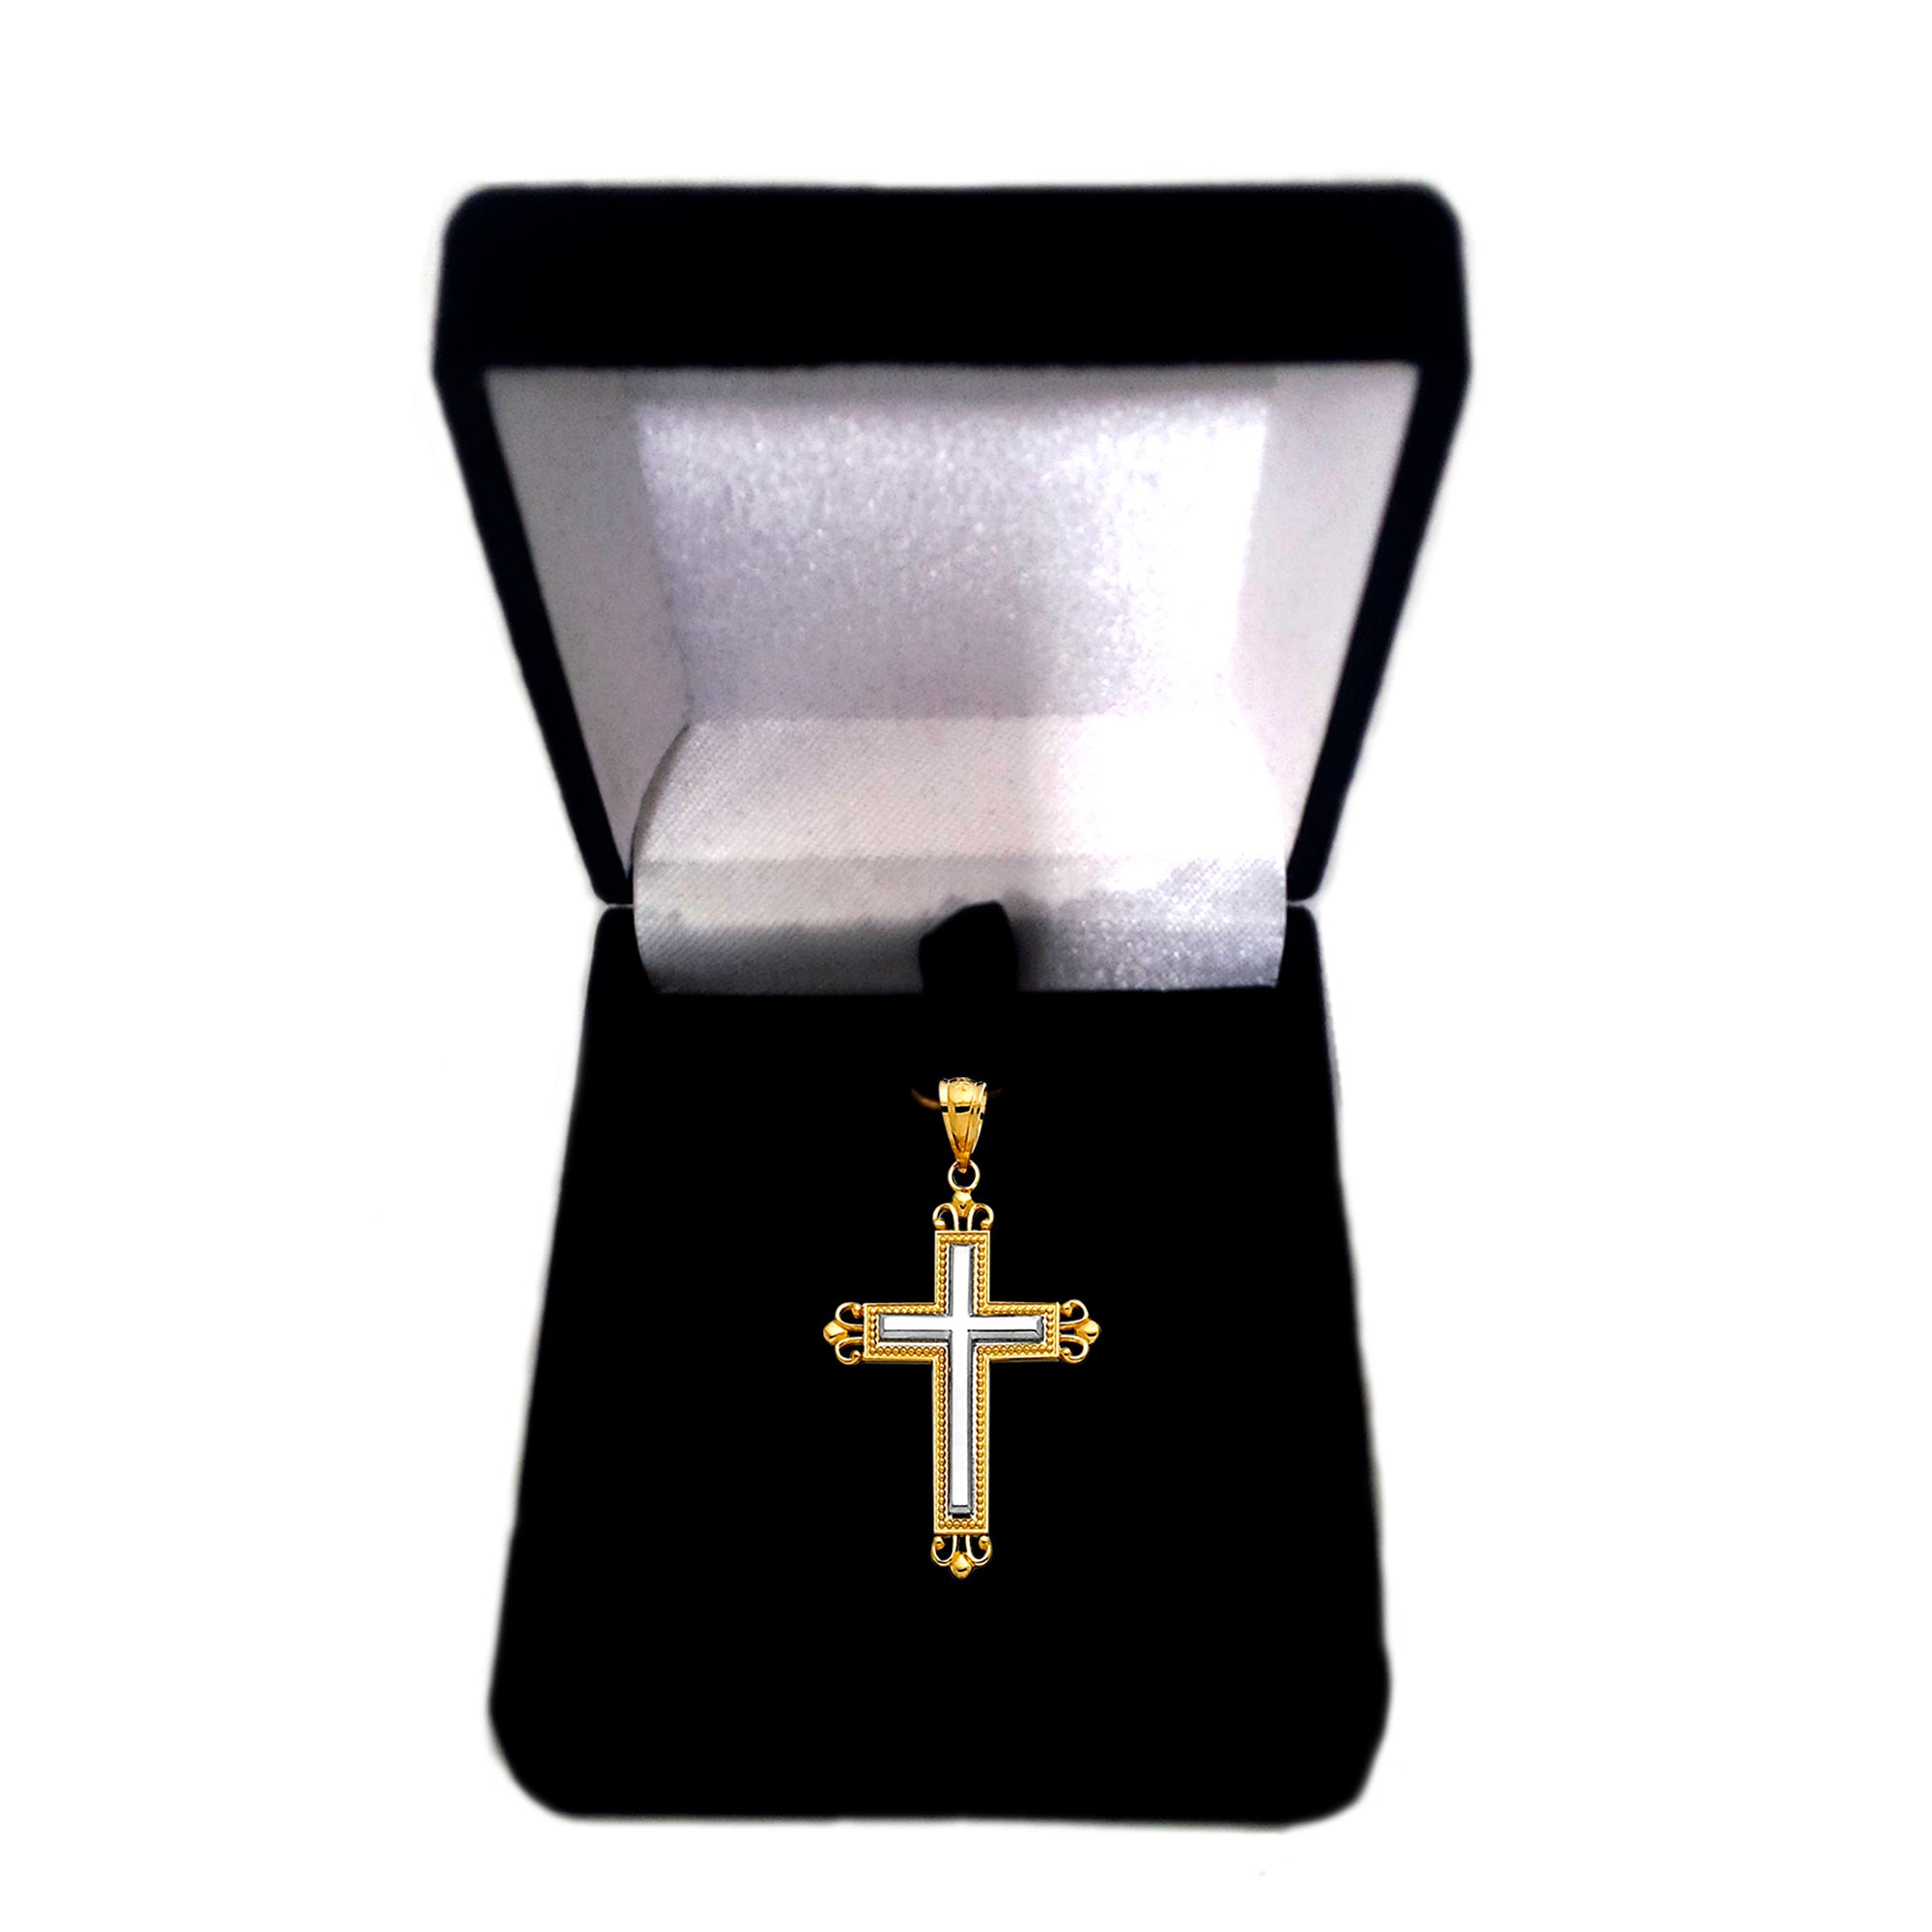 14k 2 Tone Gold Diamond Cut And Milgrain Finish Cross Pendant fine designer jewelry for men and women